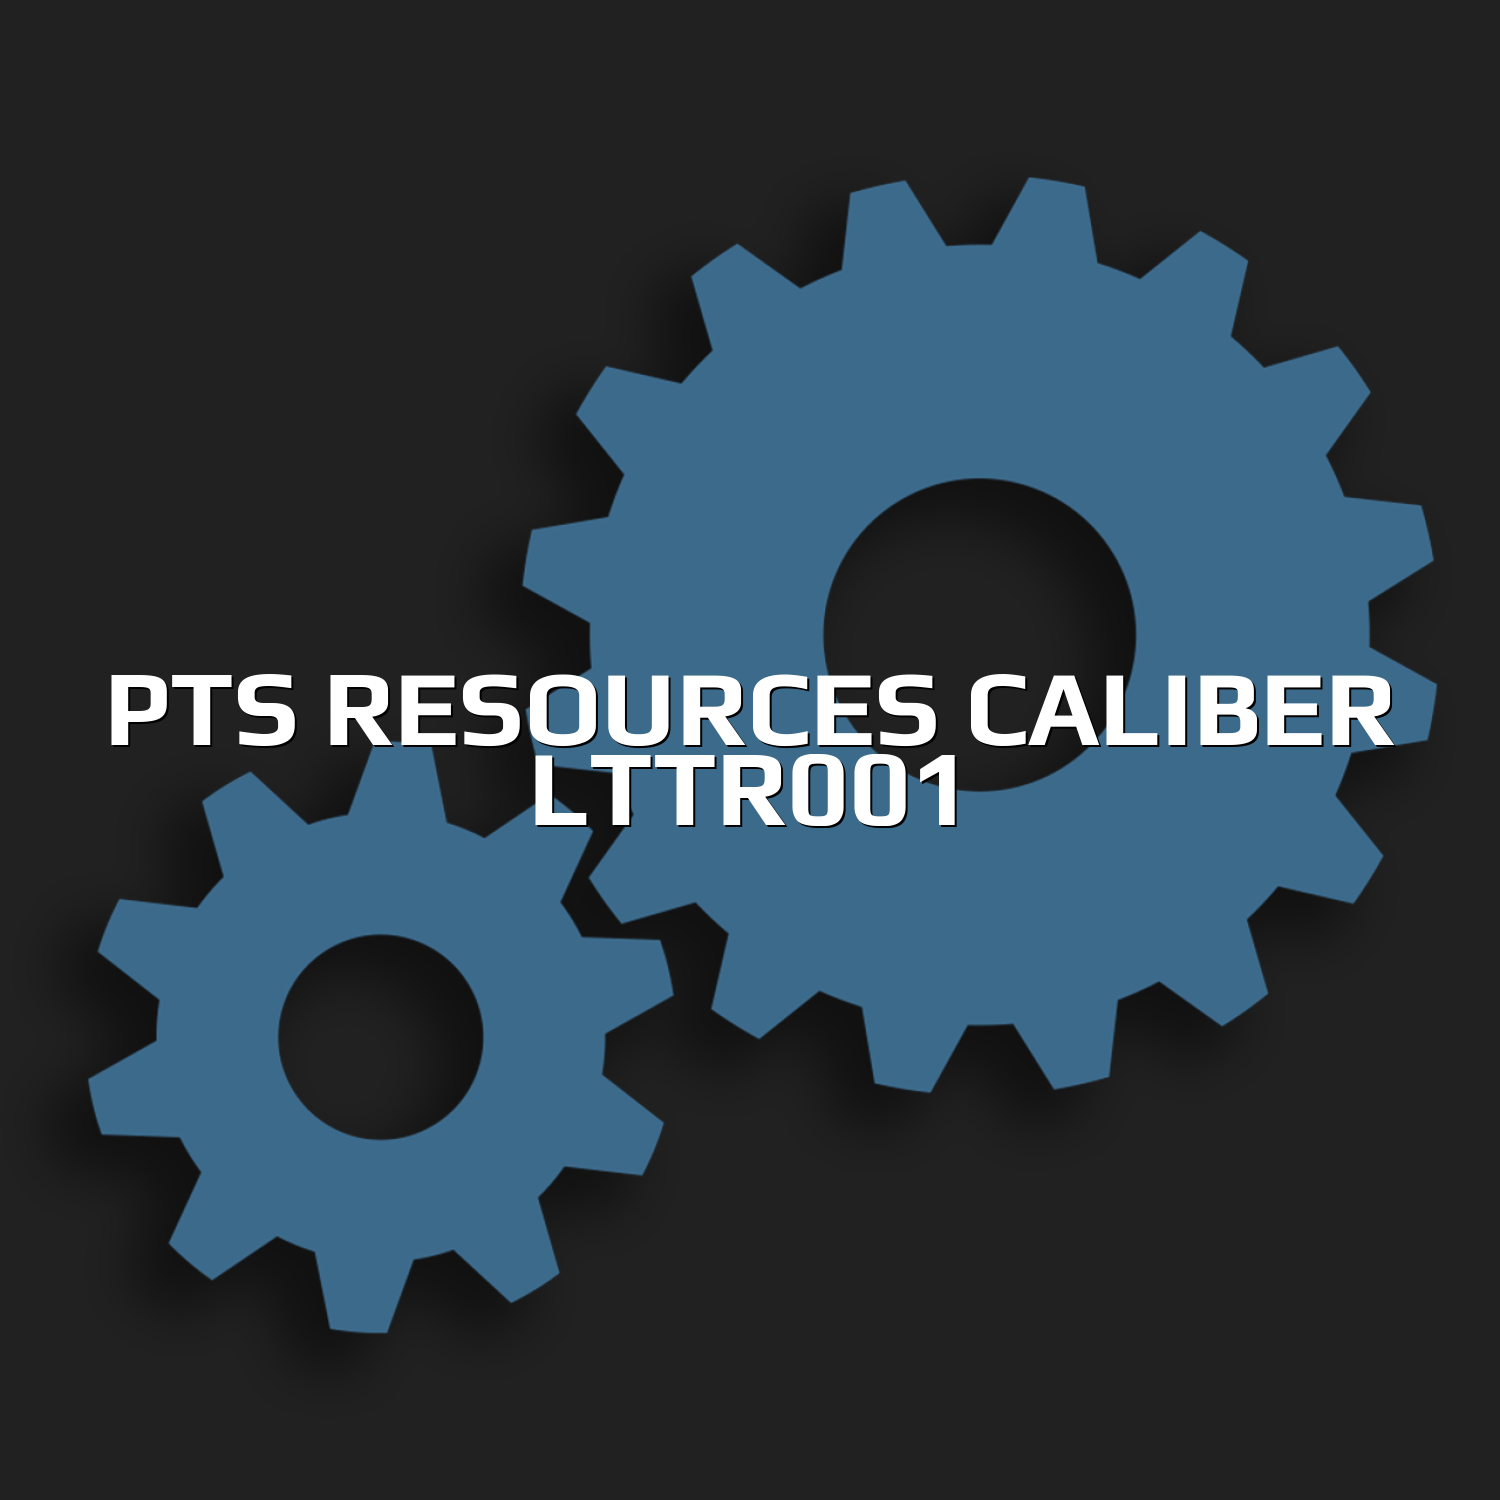 PTS Resources Caliber LTTR001